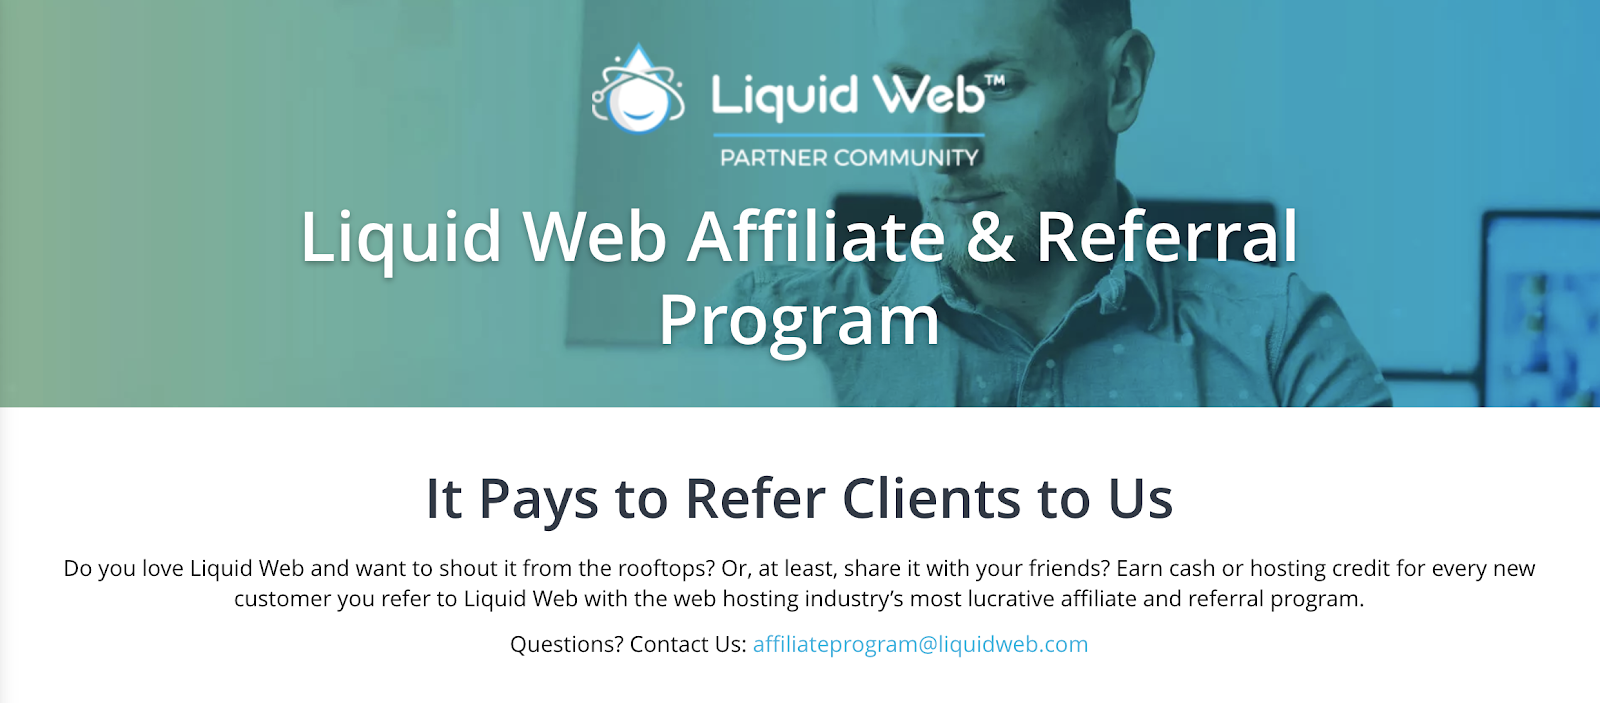 Liquid Web Affiliate Program Landing Page (Screenshot)